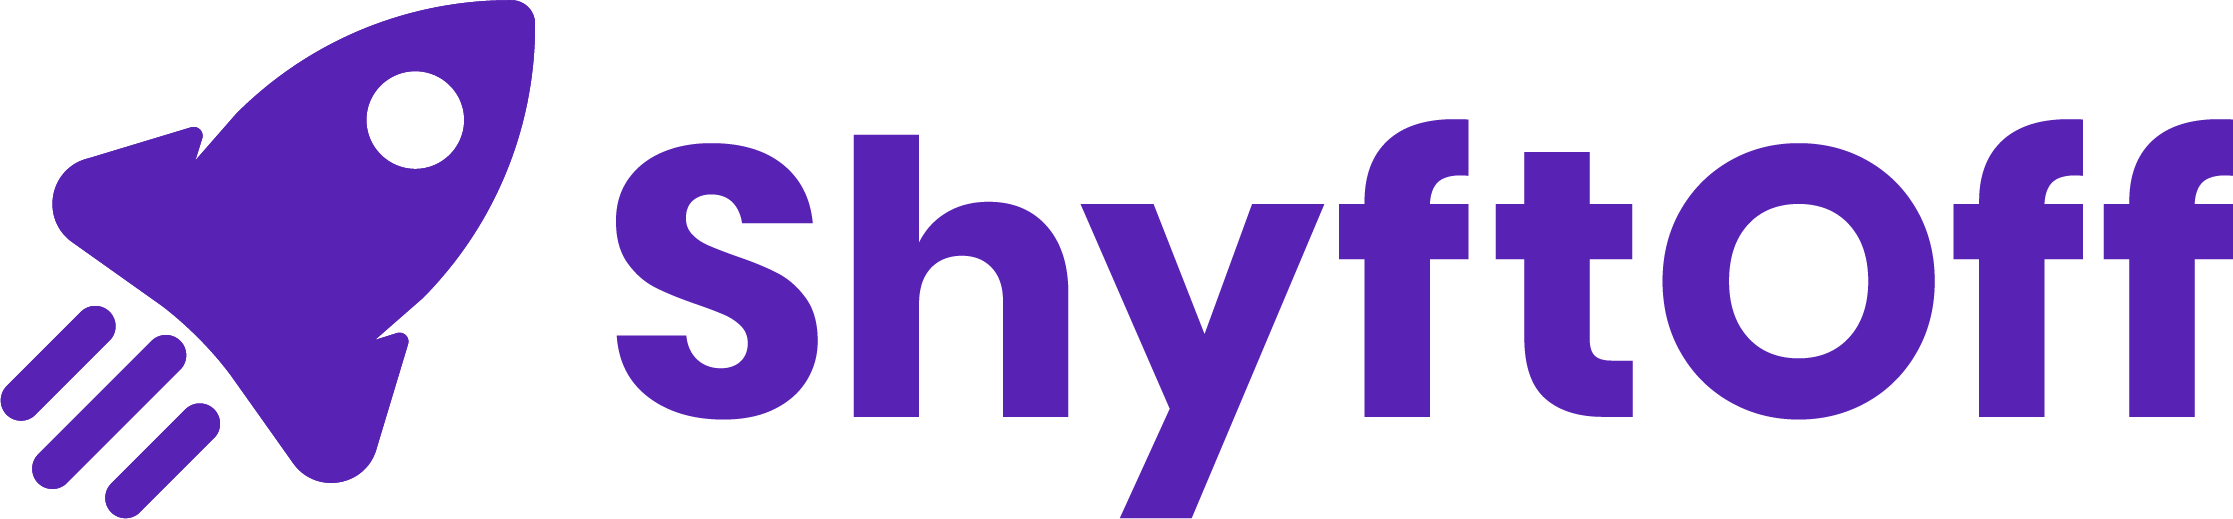 shyftoff-purple